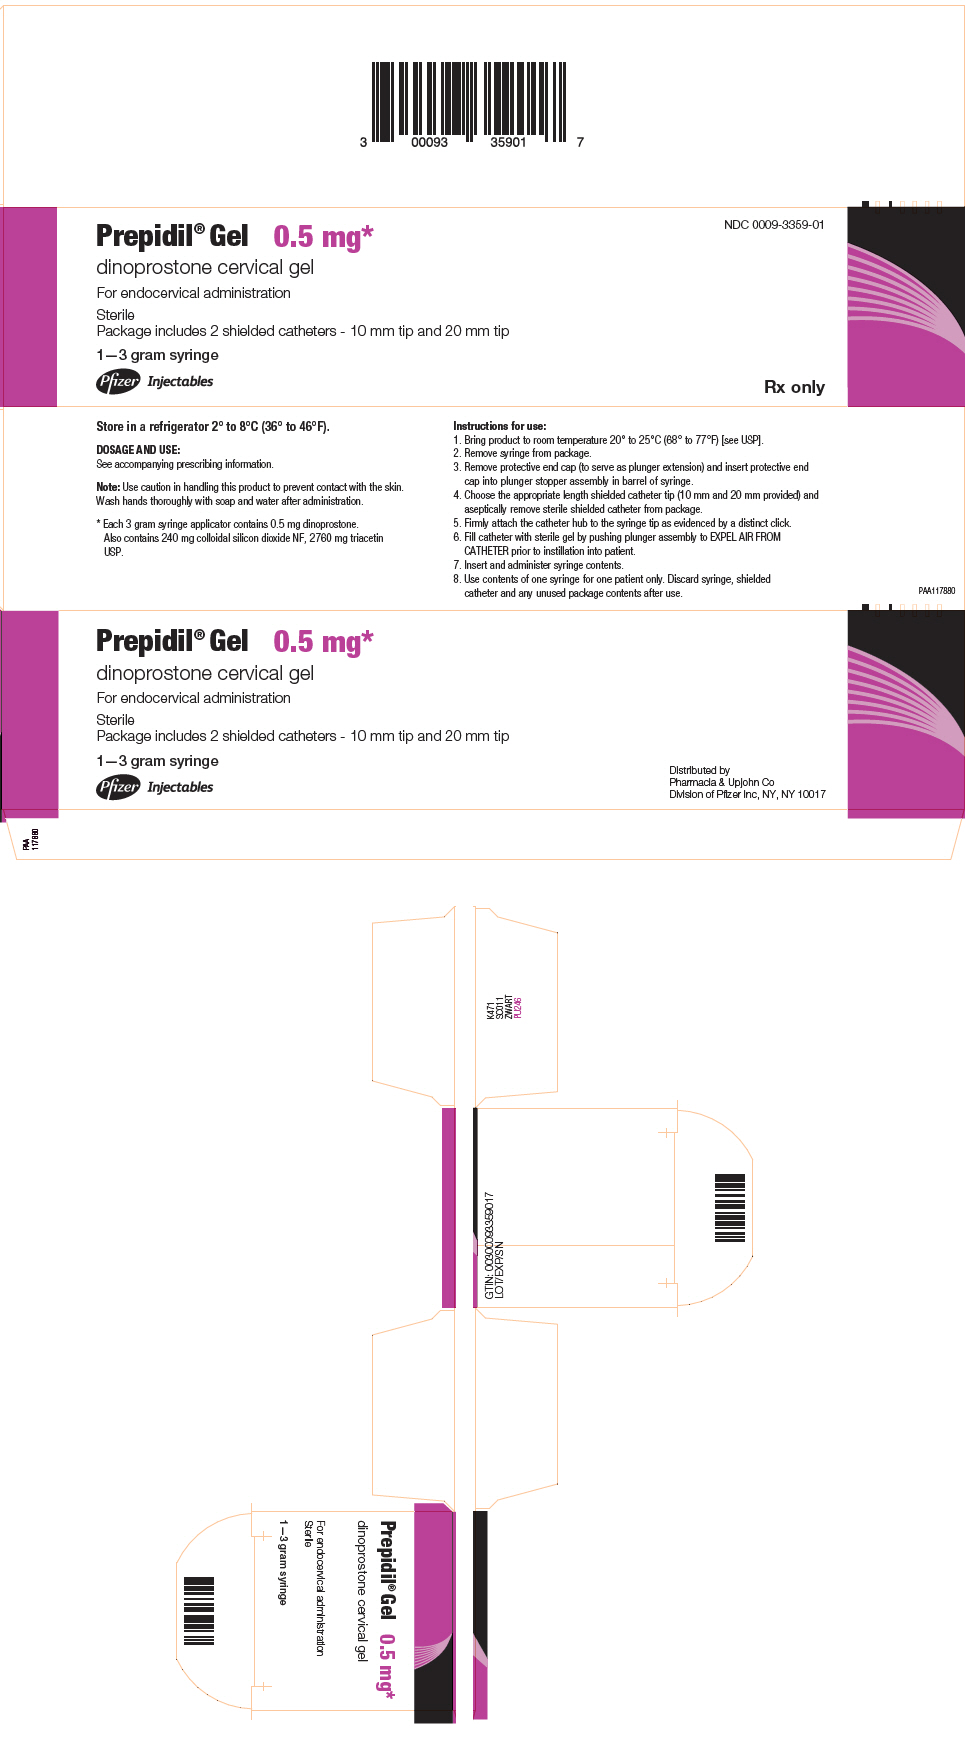 PRINCIPAL DISPLAY PANEL - 3 gram Syringe Carton